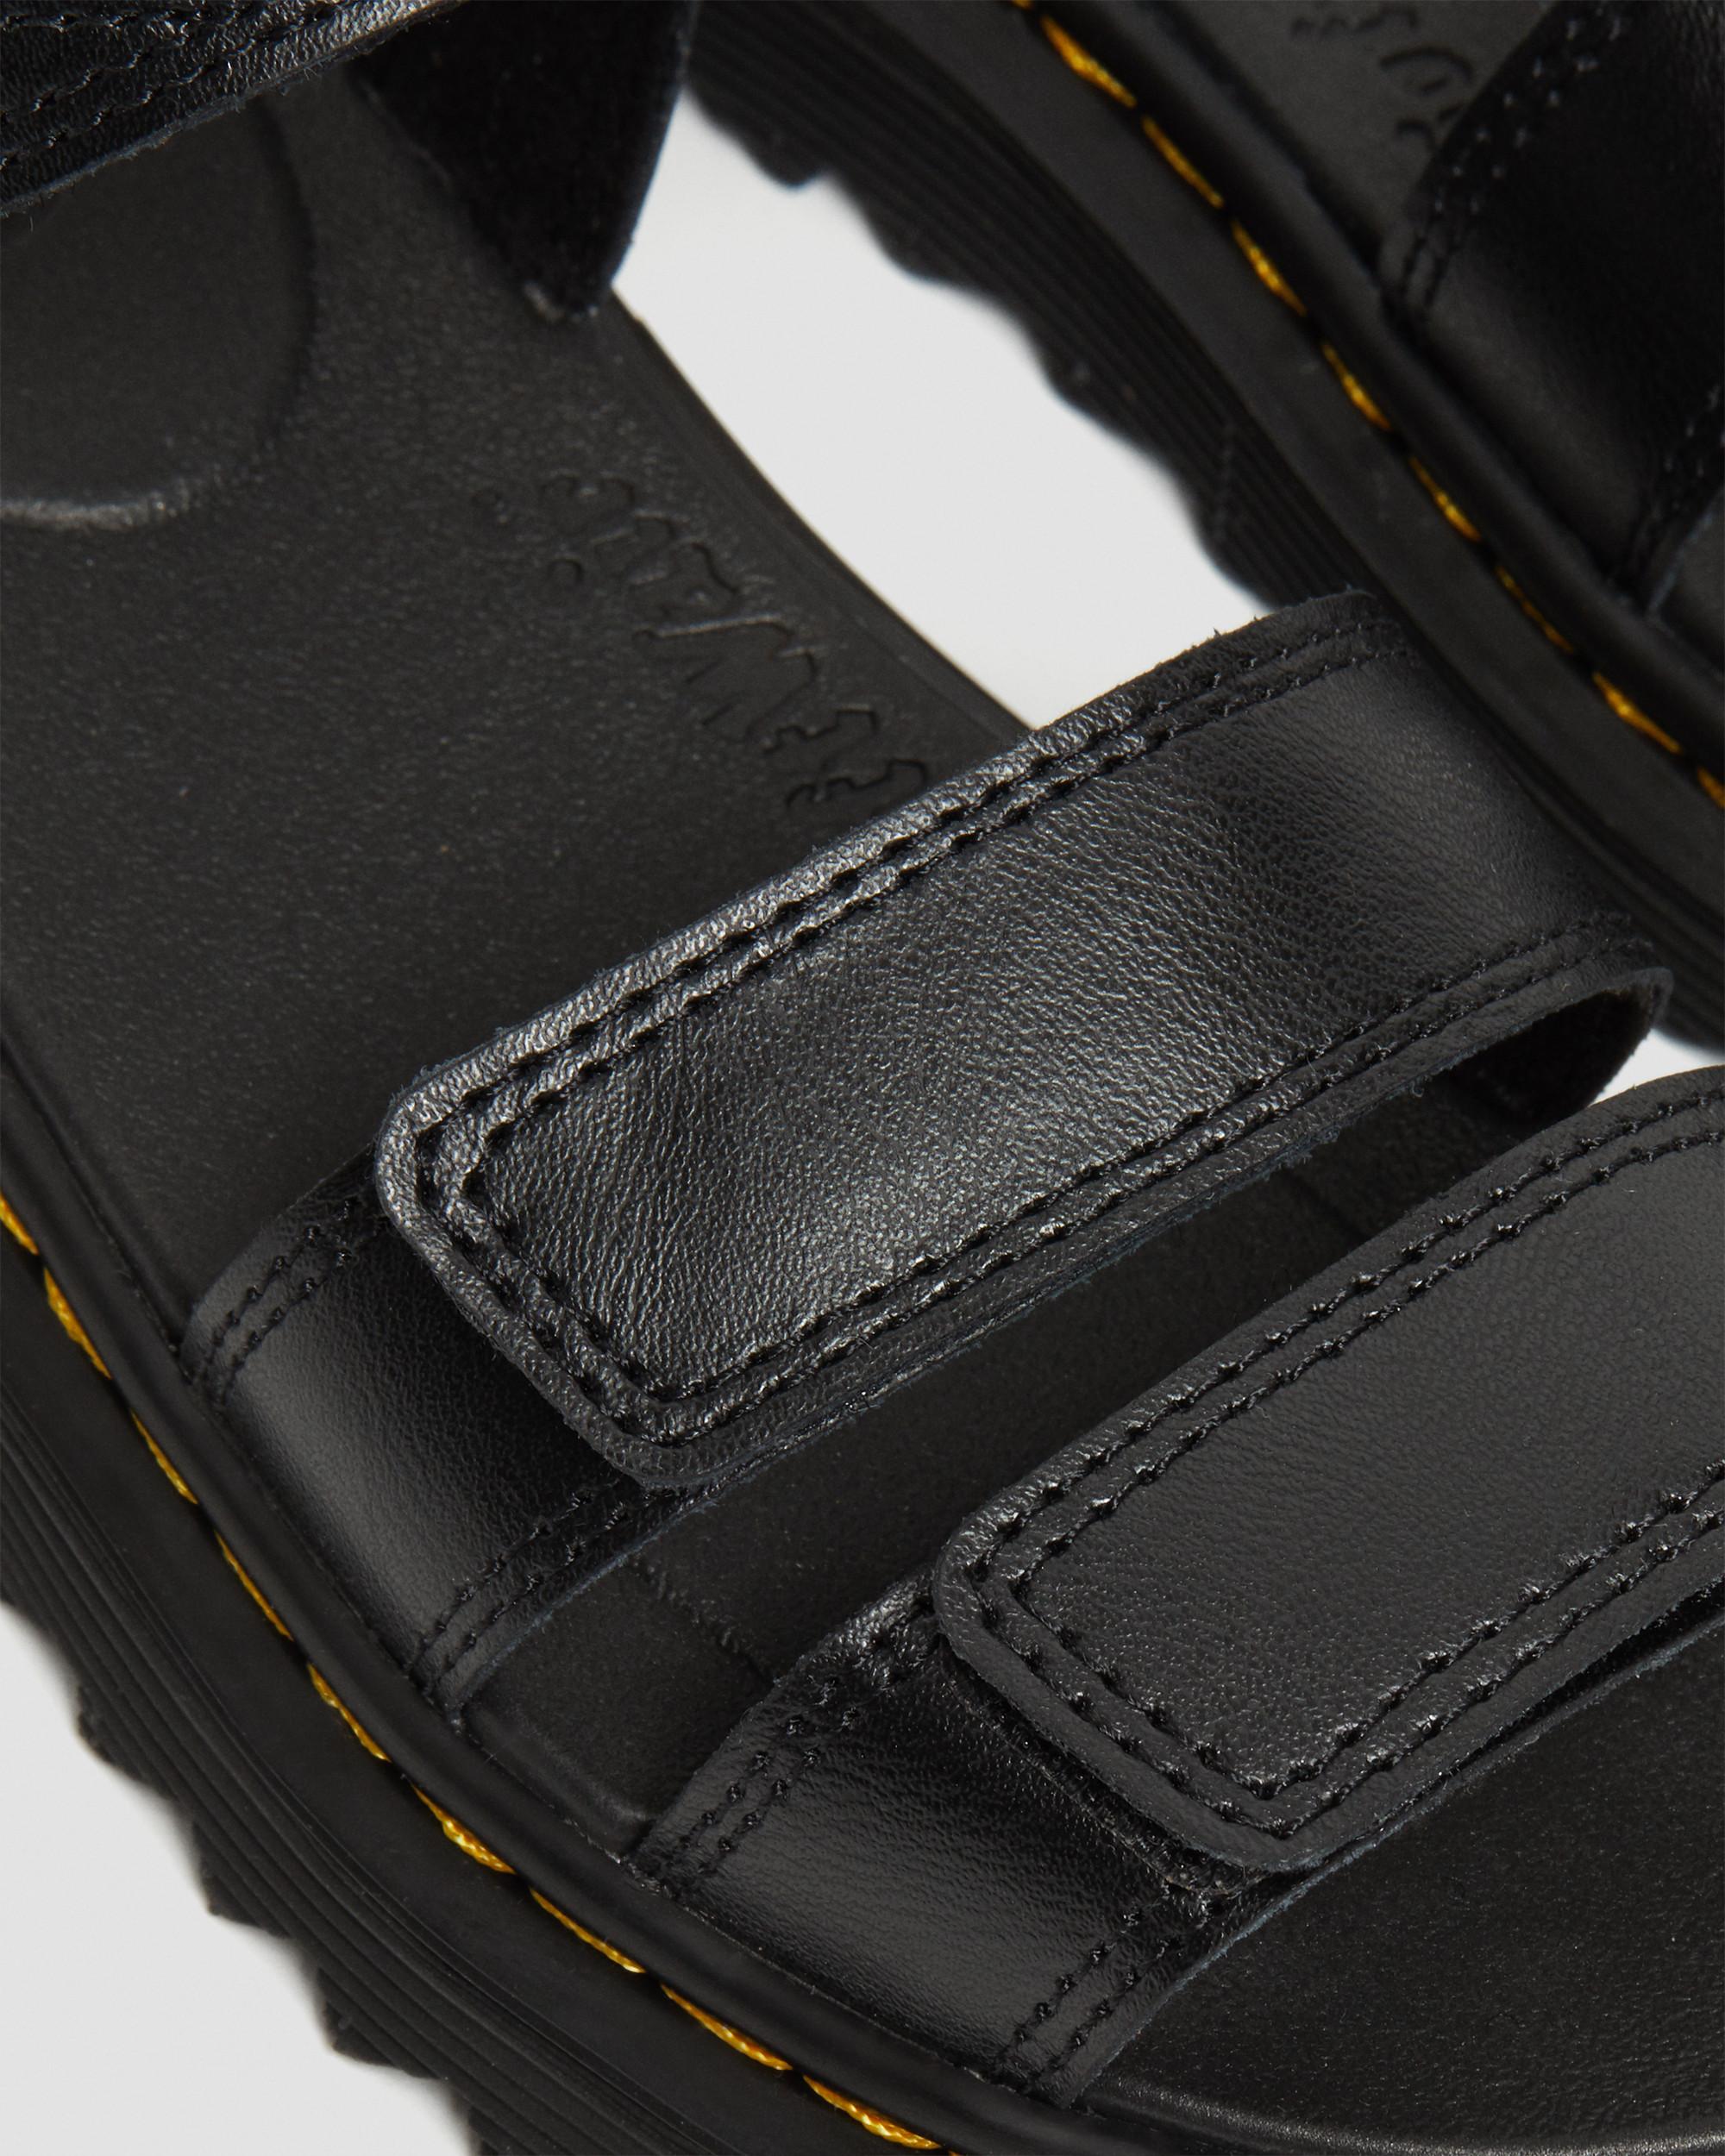 Junior Klaire Leather Strap Sandals in Black